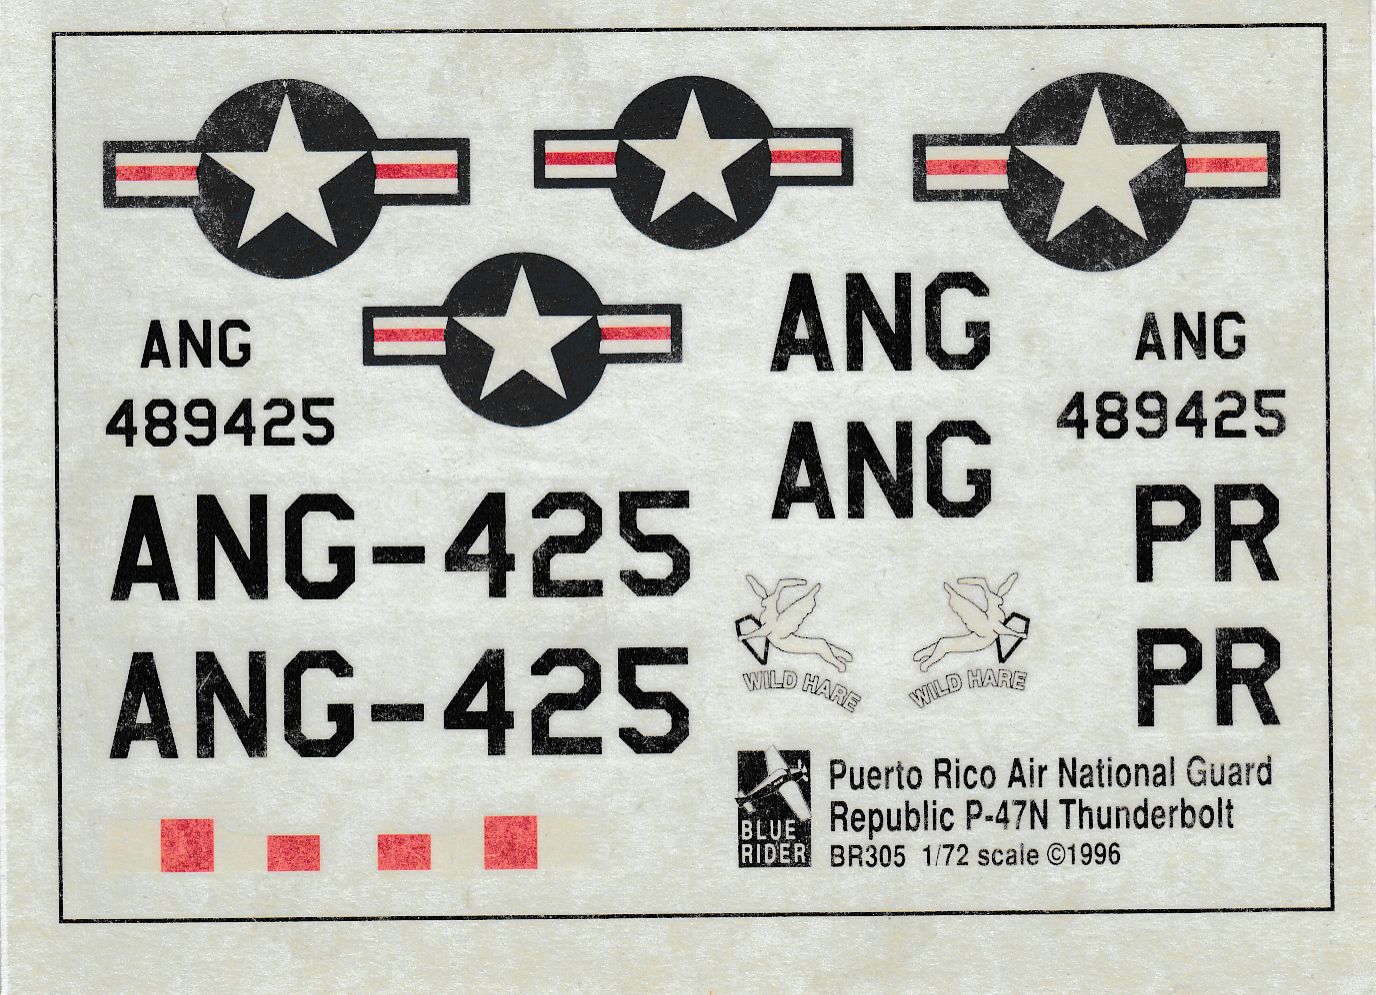 Blue Rider BR305 1/72 Puerto Rico ANG Republic F-47N Thunderbolt Decals